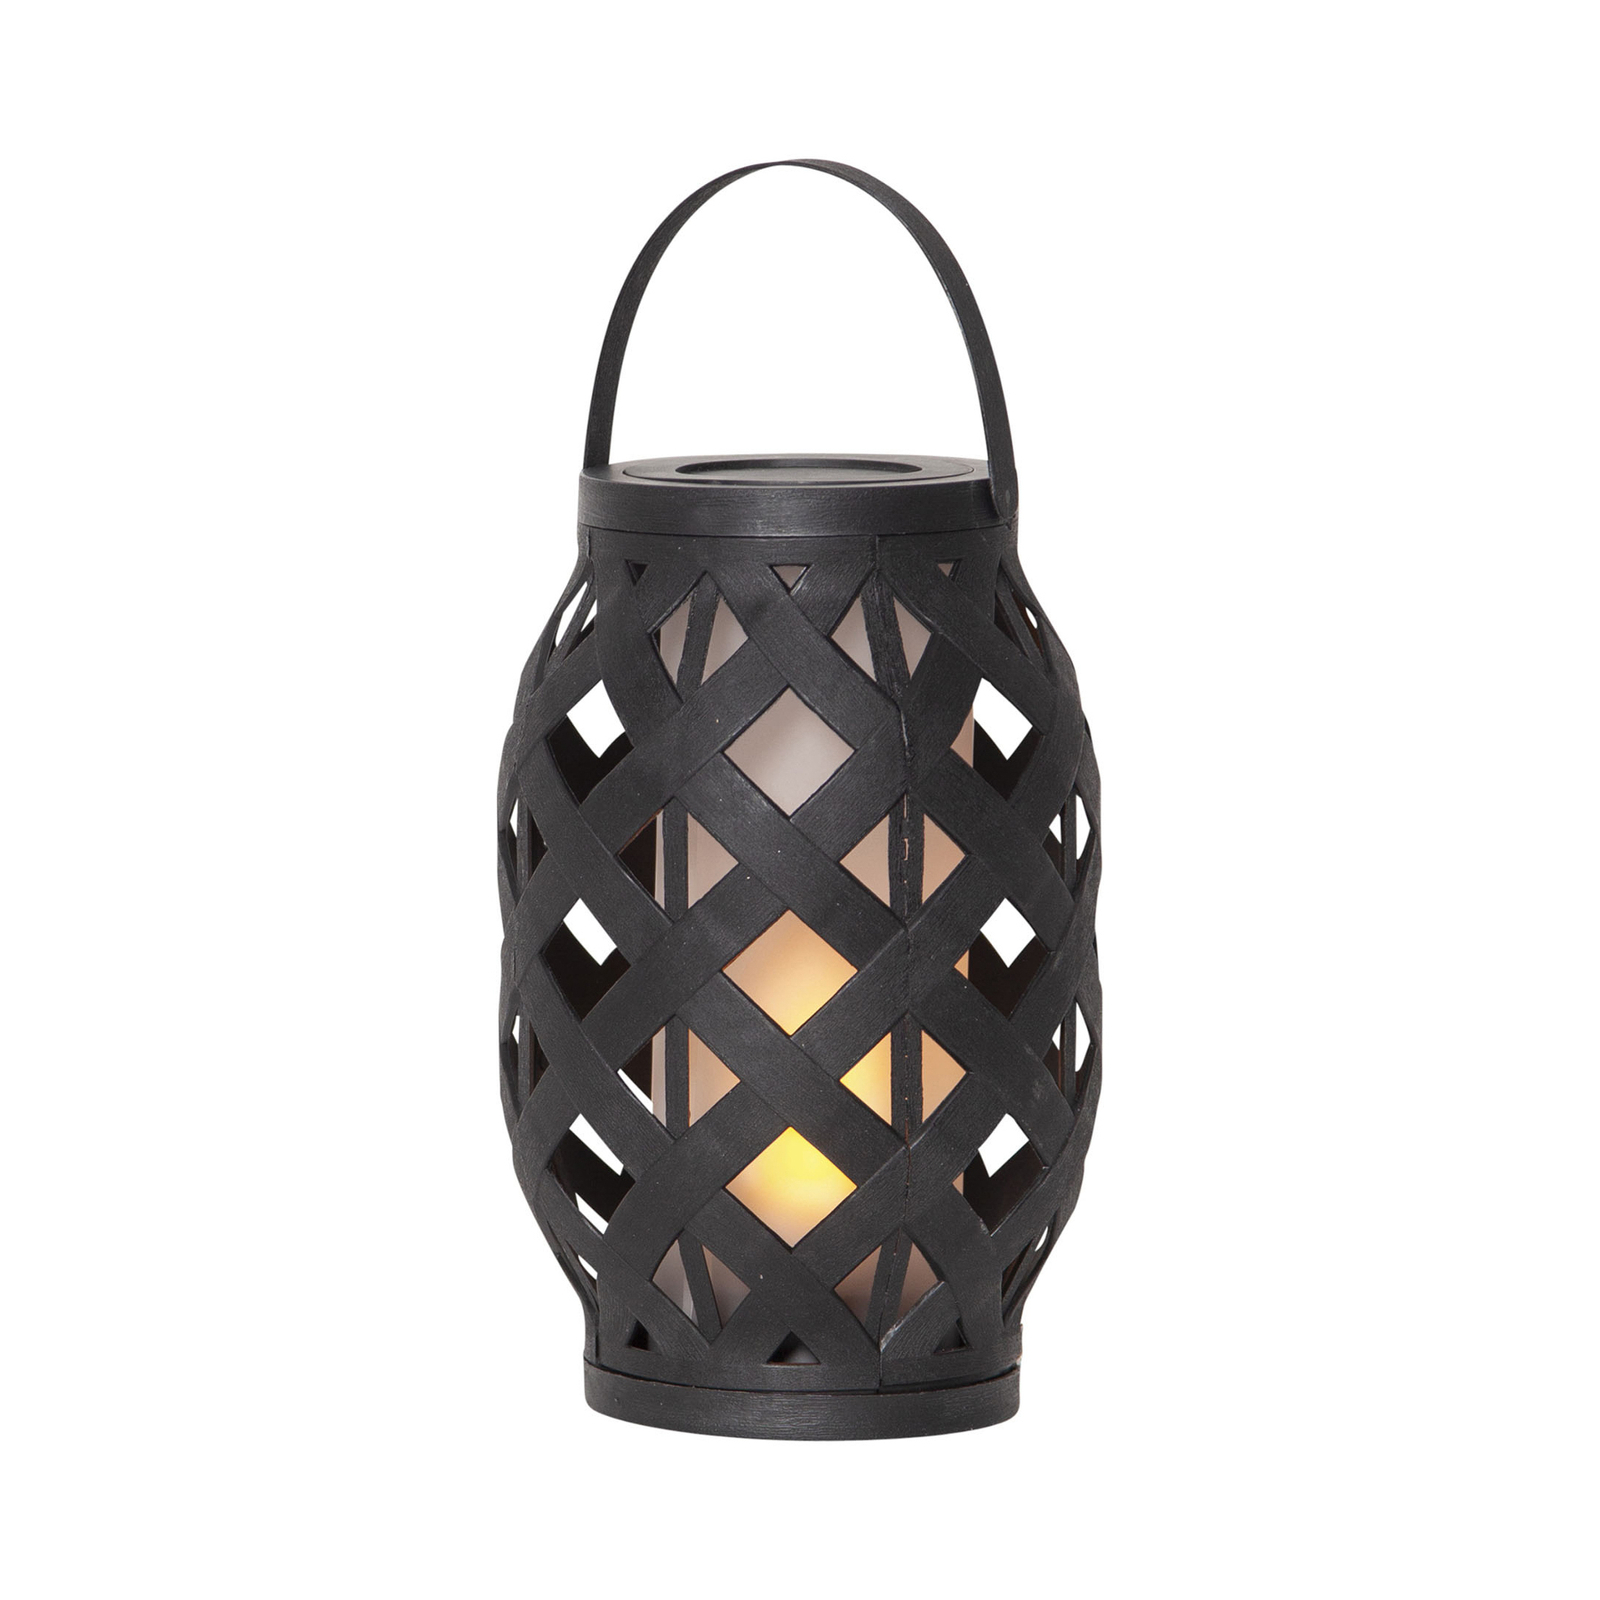 Flame Lantern -LED-lyhty, musta, korkeus 23 cm